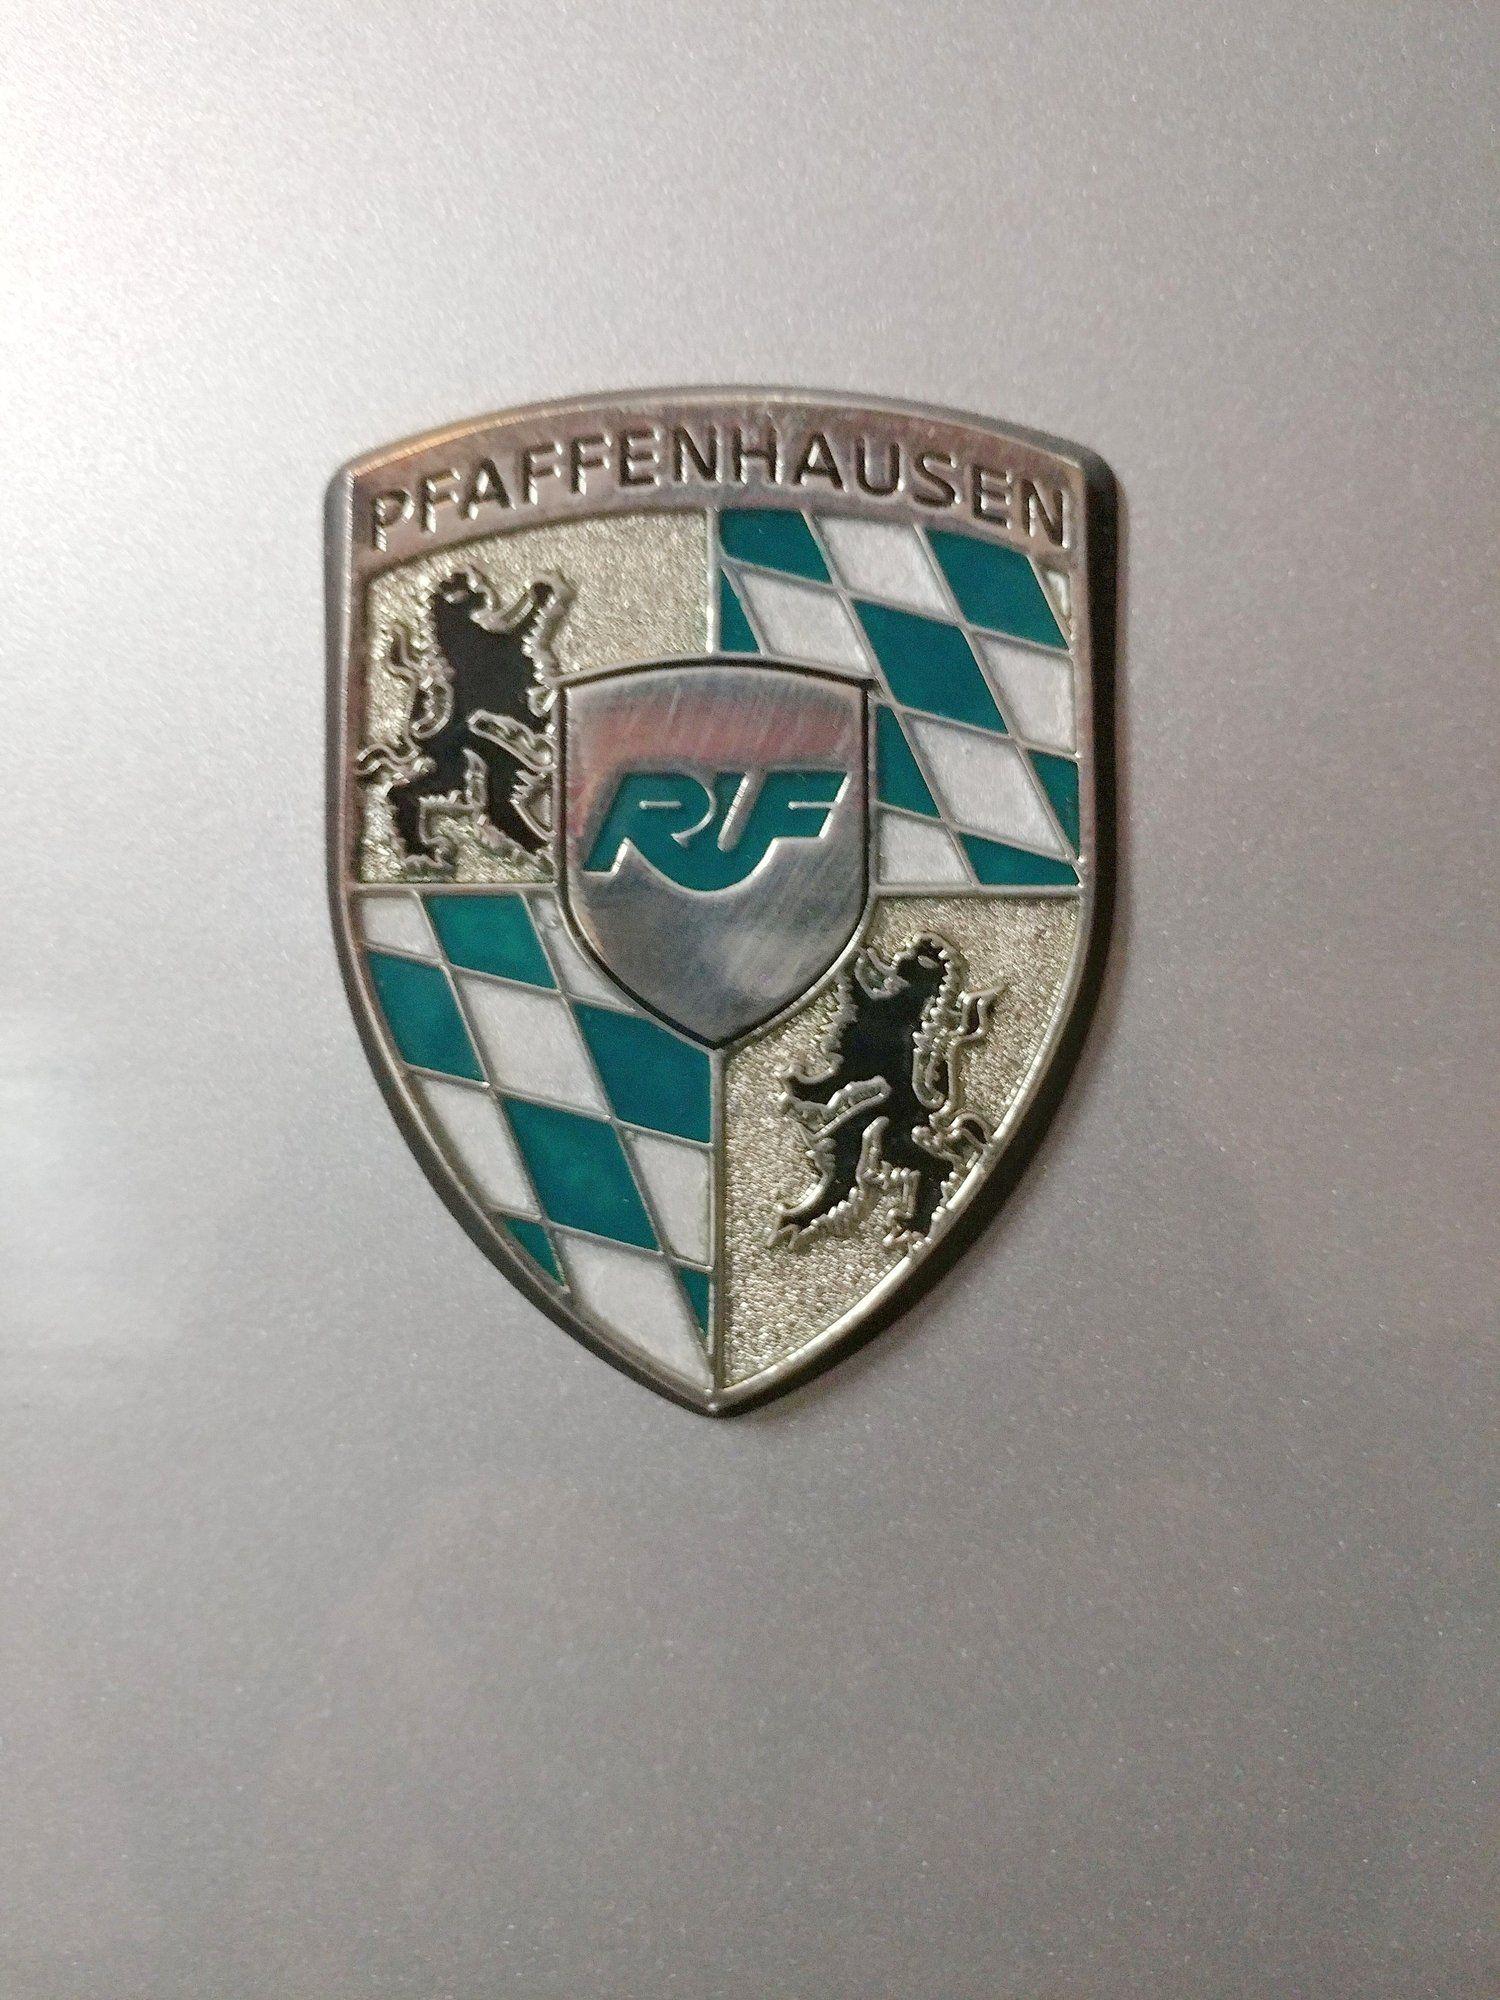 Ruf Porsche Logo - Updated Pics Of My 997 RUF R Kompressor